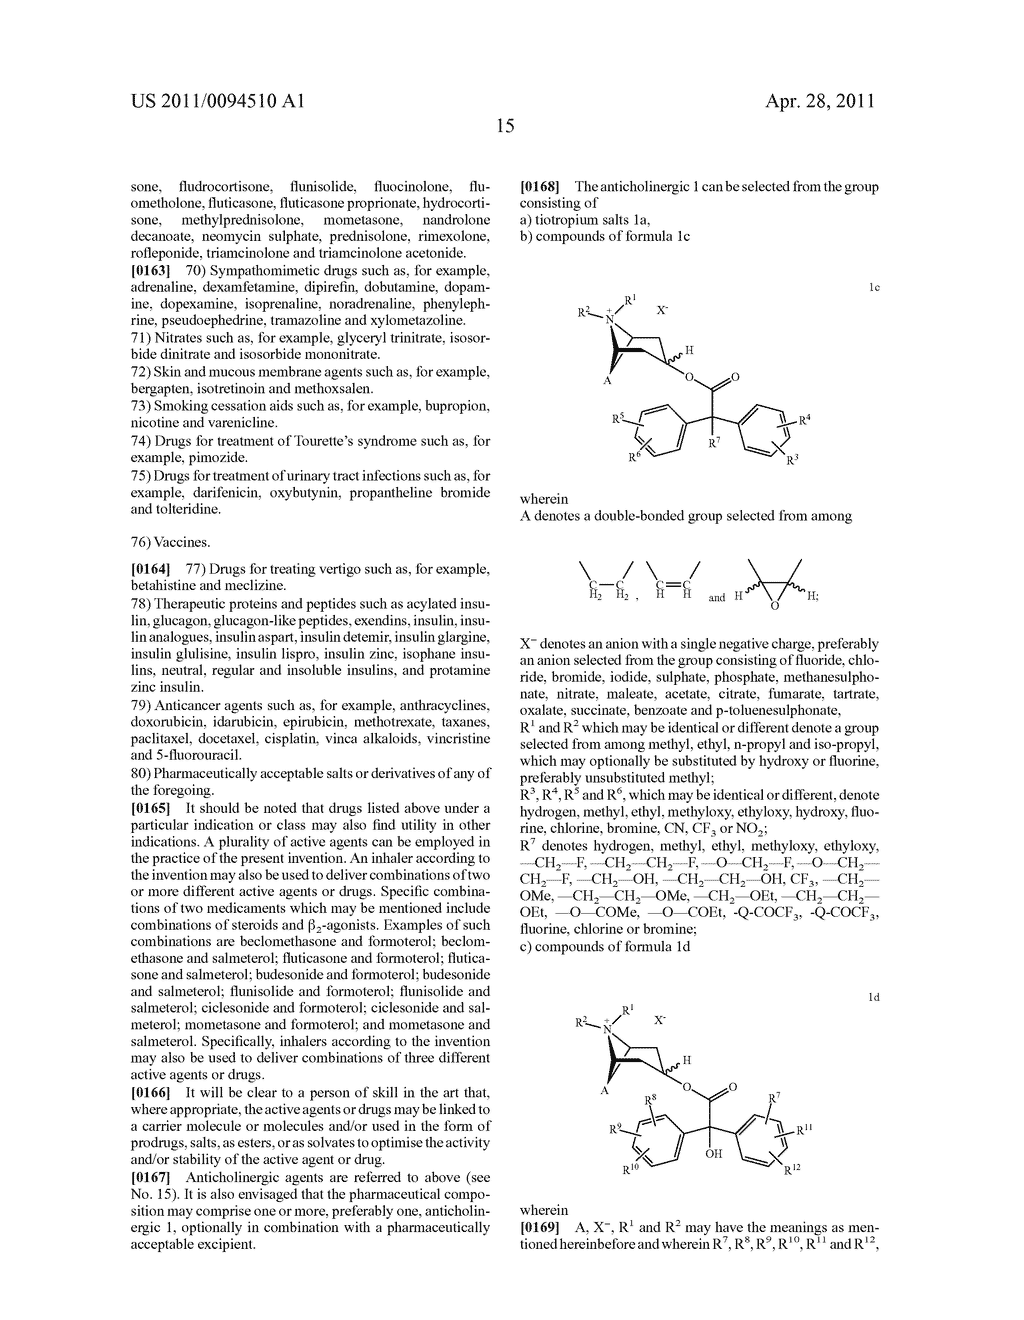 INHALER - diagram, schematic, and image 33